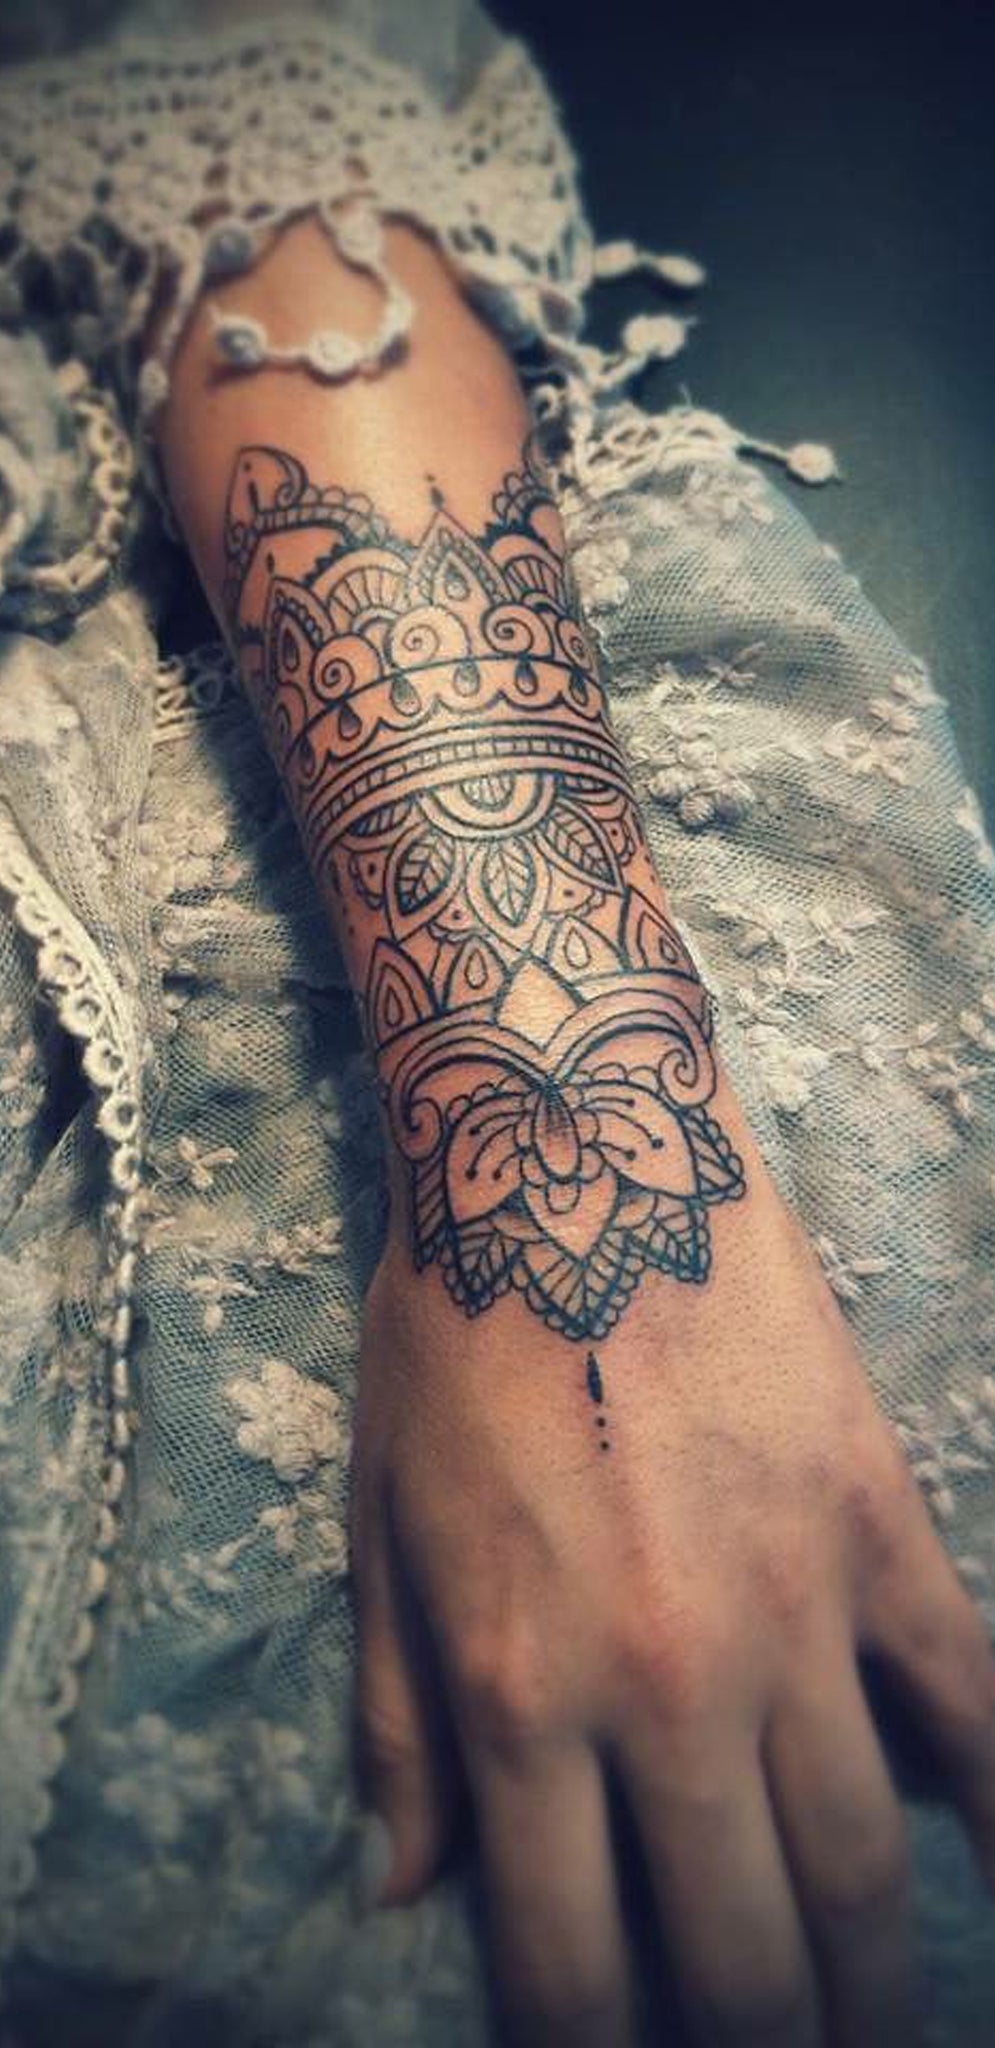 Mandala Outer Forearm Tattoo Ideas for Women - Black Henna Floral Flower Lotus Arm Sleeve Tat -  ideas del tatuaje del antebrazo de loto   tatuaje de la manga del brazo- www.MyBodiArt.com